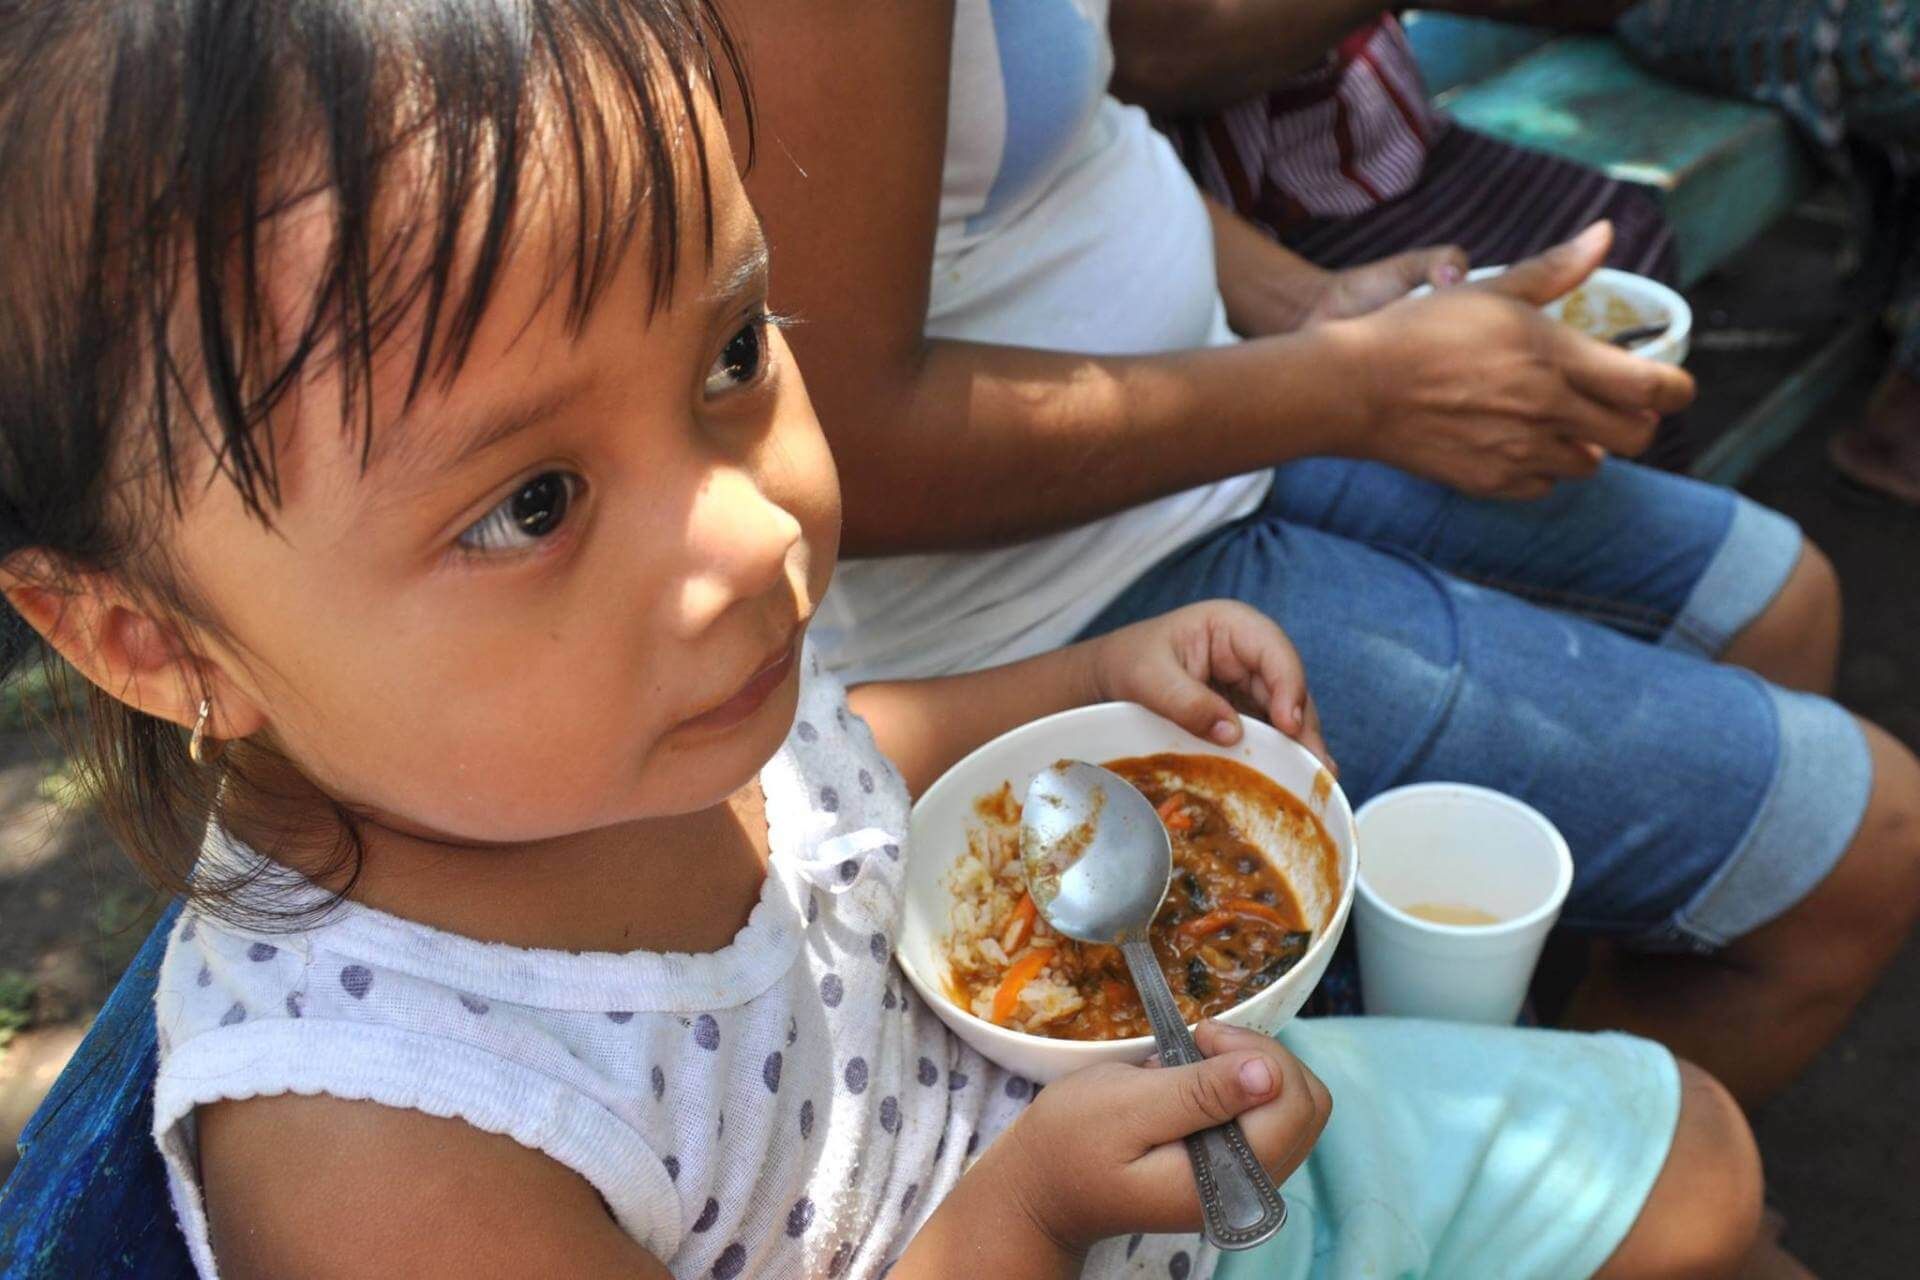 Amigos Internacionales feeds vulnerable children in Guatemala and Africa through their feeding program